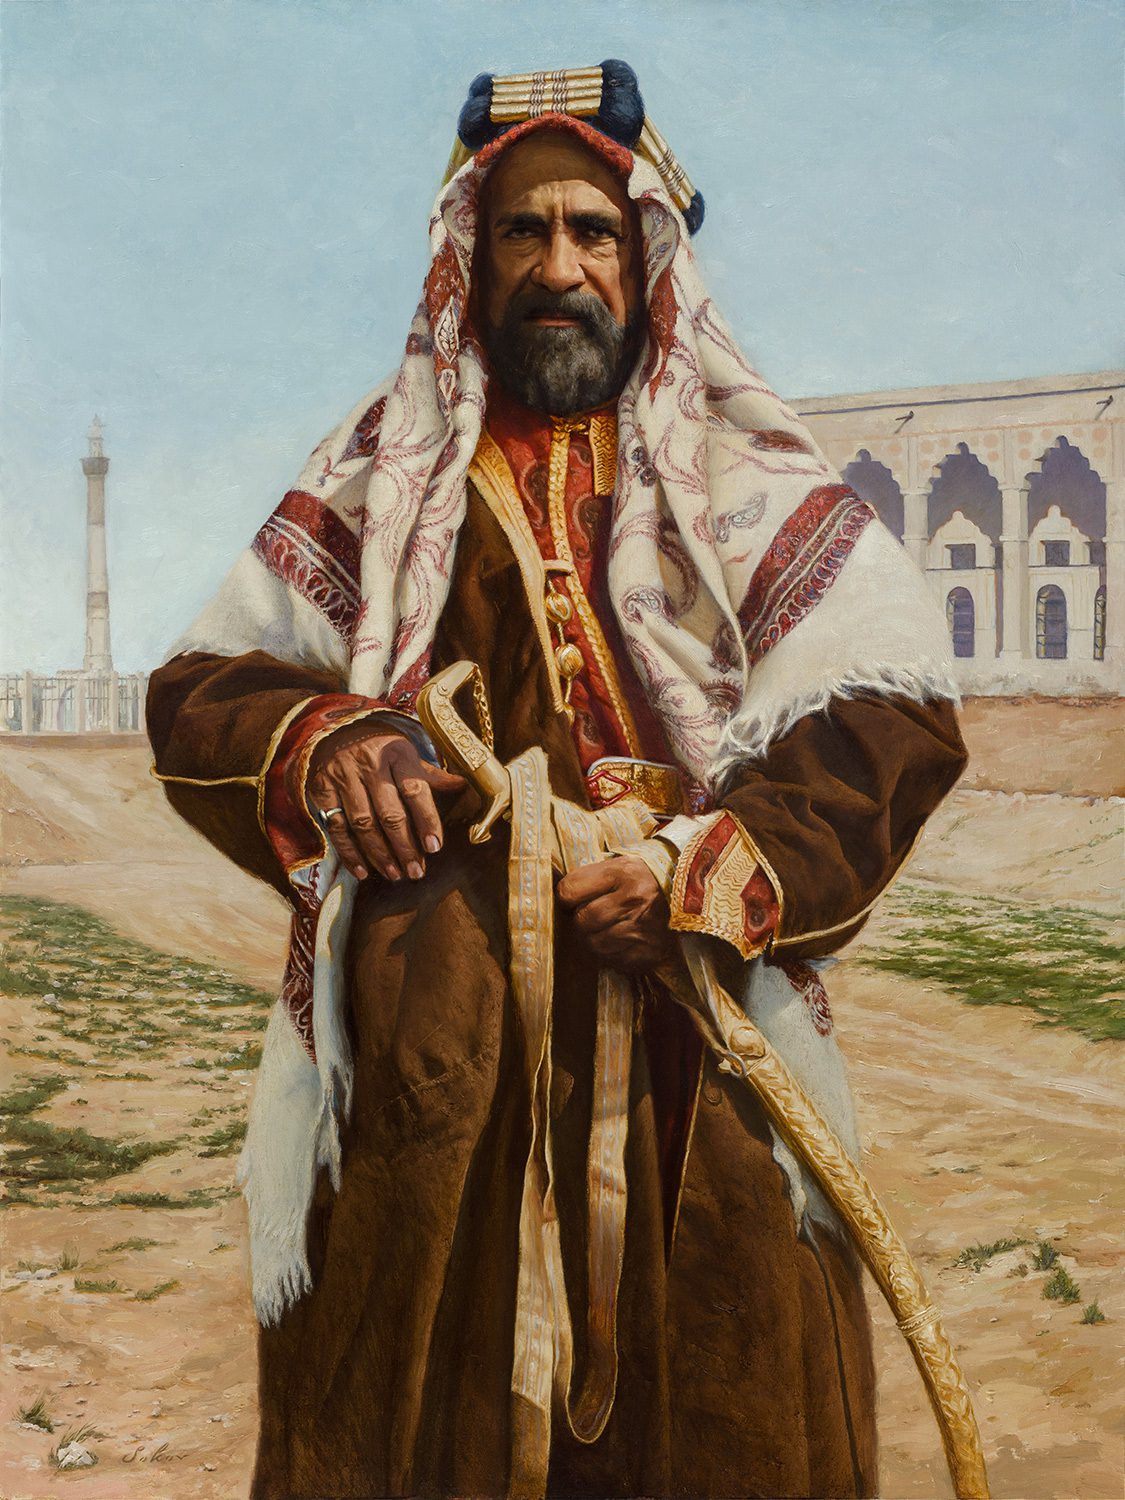 his-highness-sheikh-sir-hamad-bin-isa-al-khalifa-ruler-of-bahrain